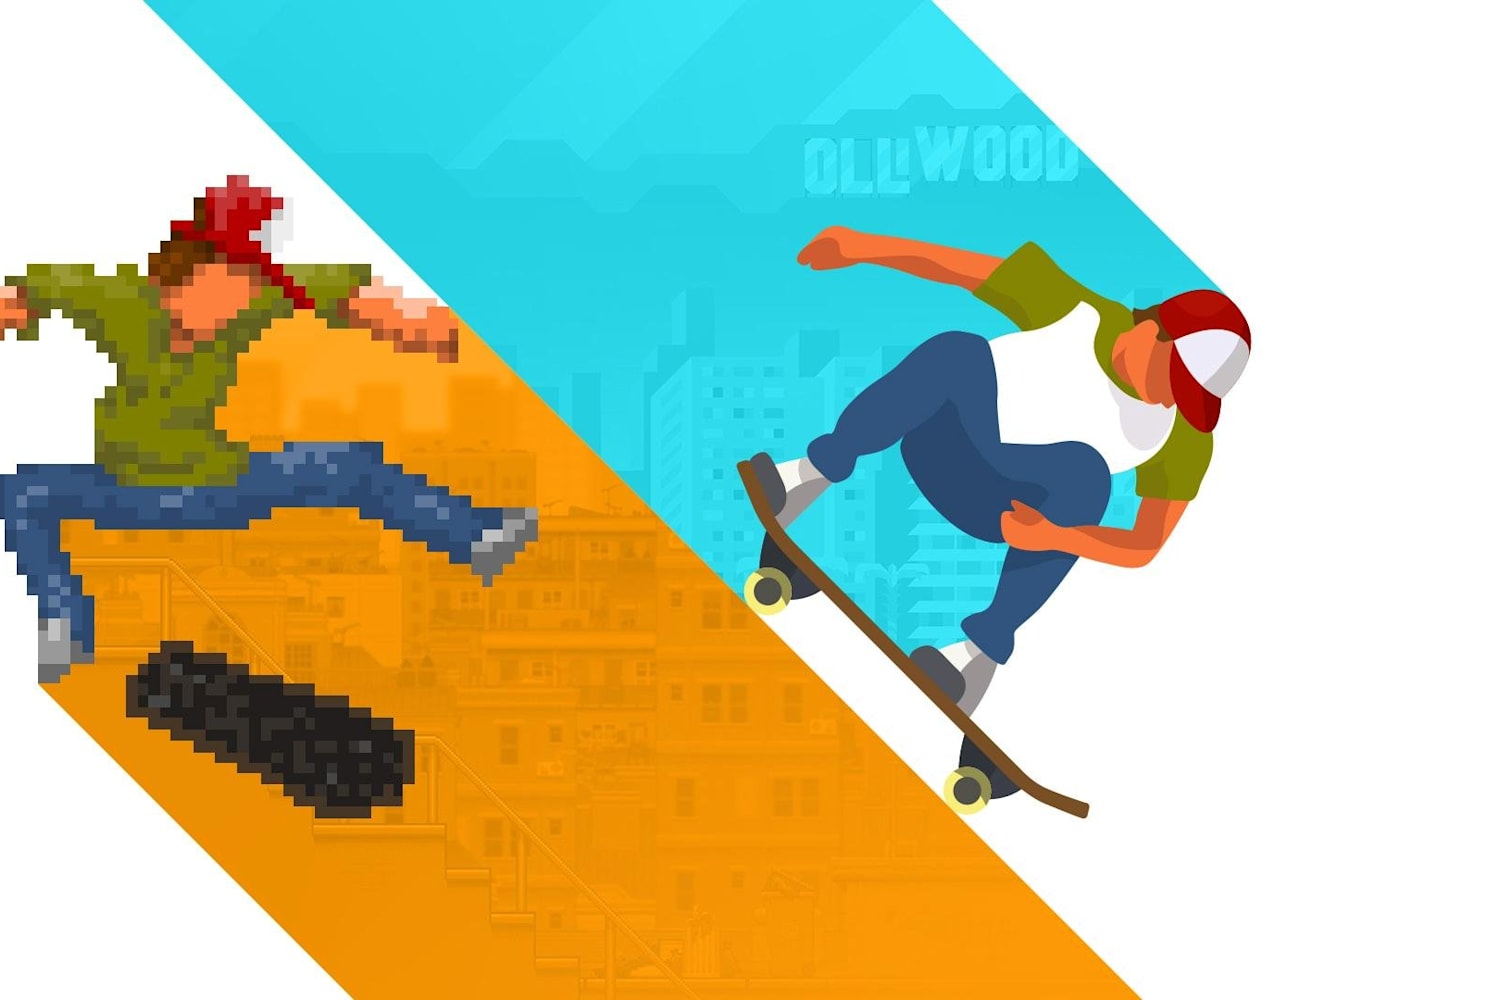 skateboarding games for switch